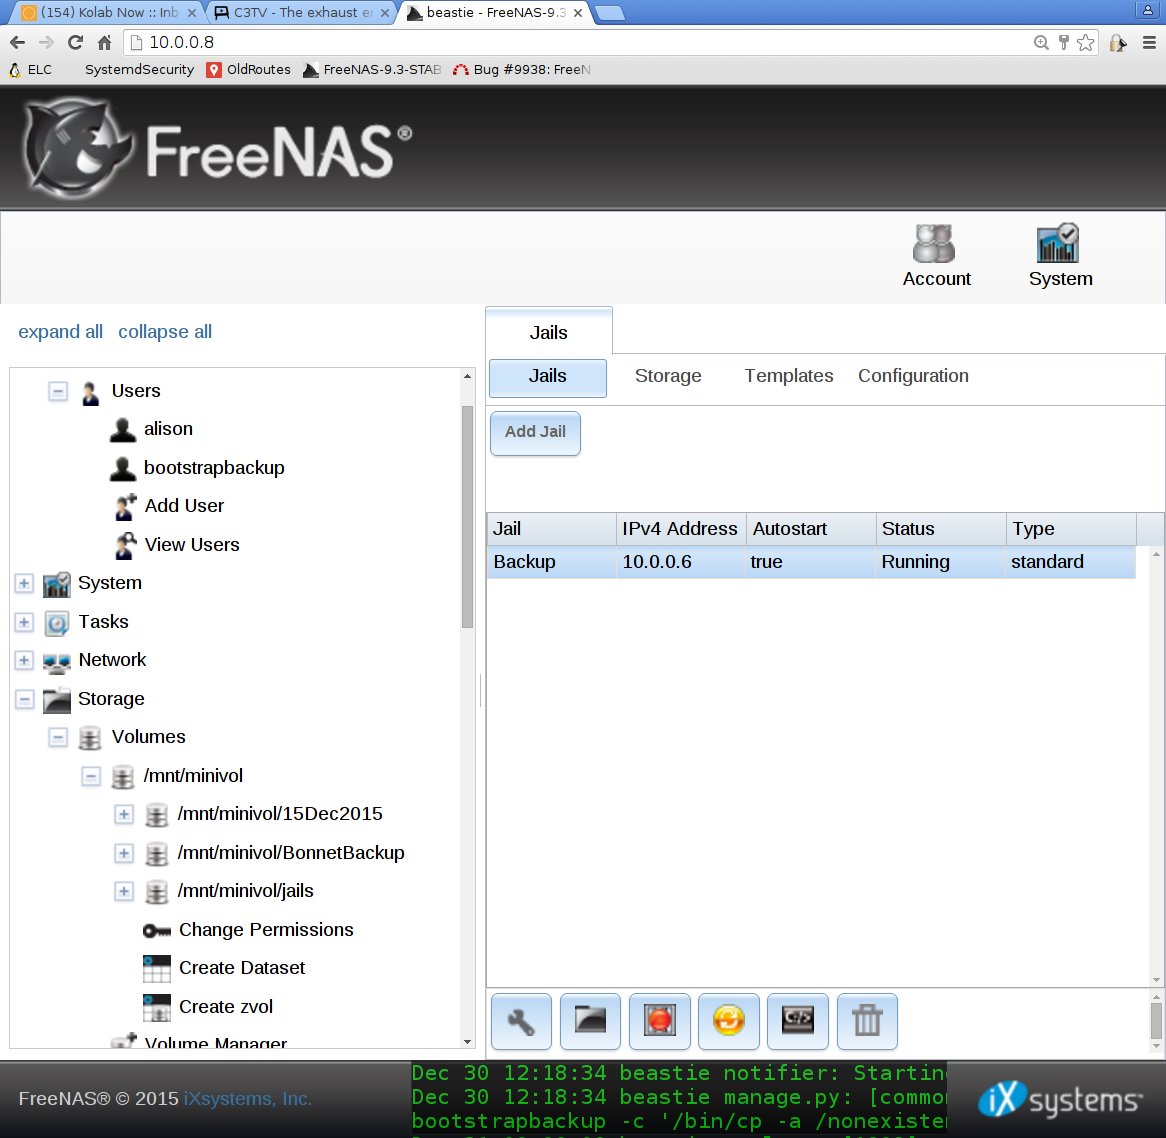 Detailed configuration of Backup
jail on FreeNAS